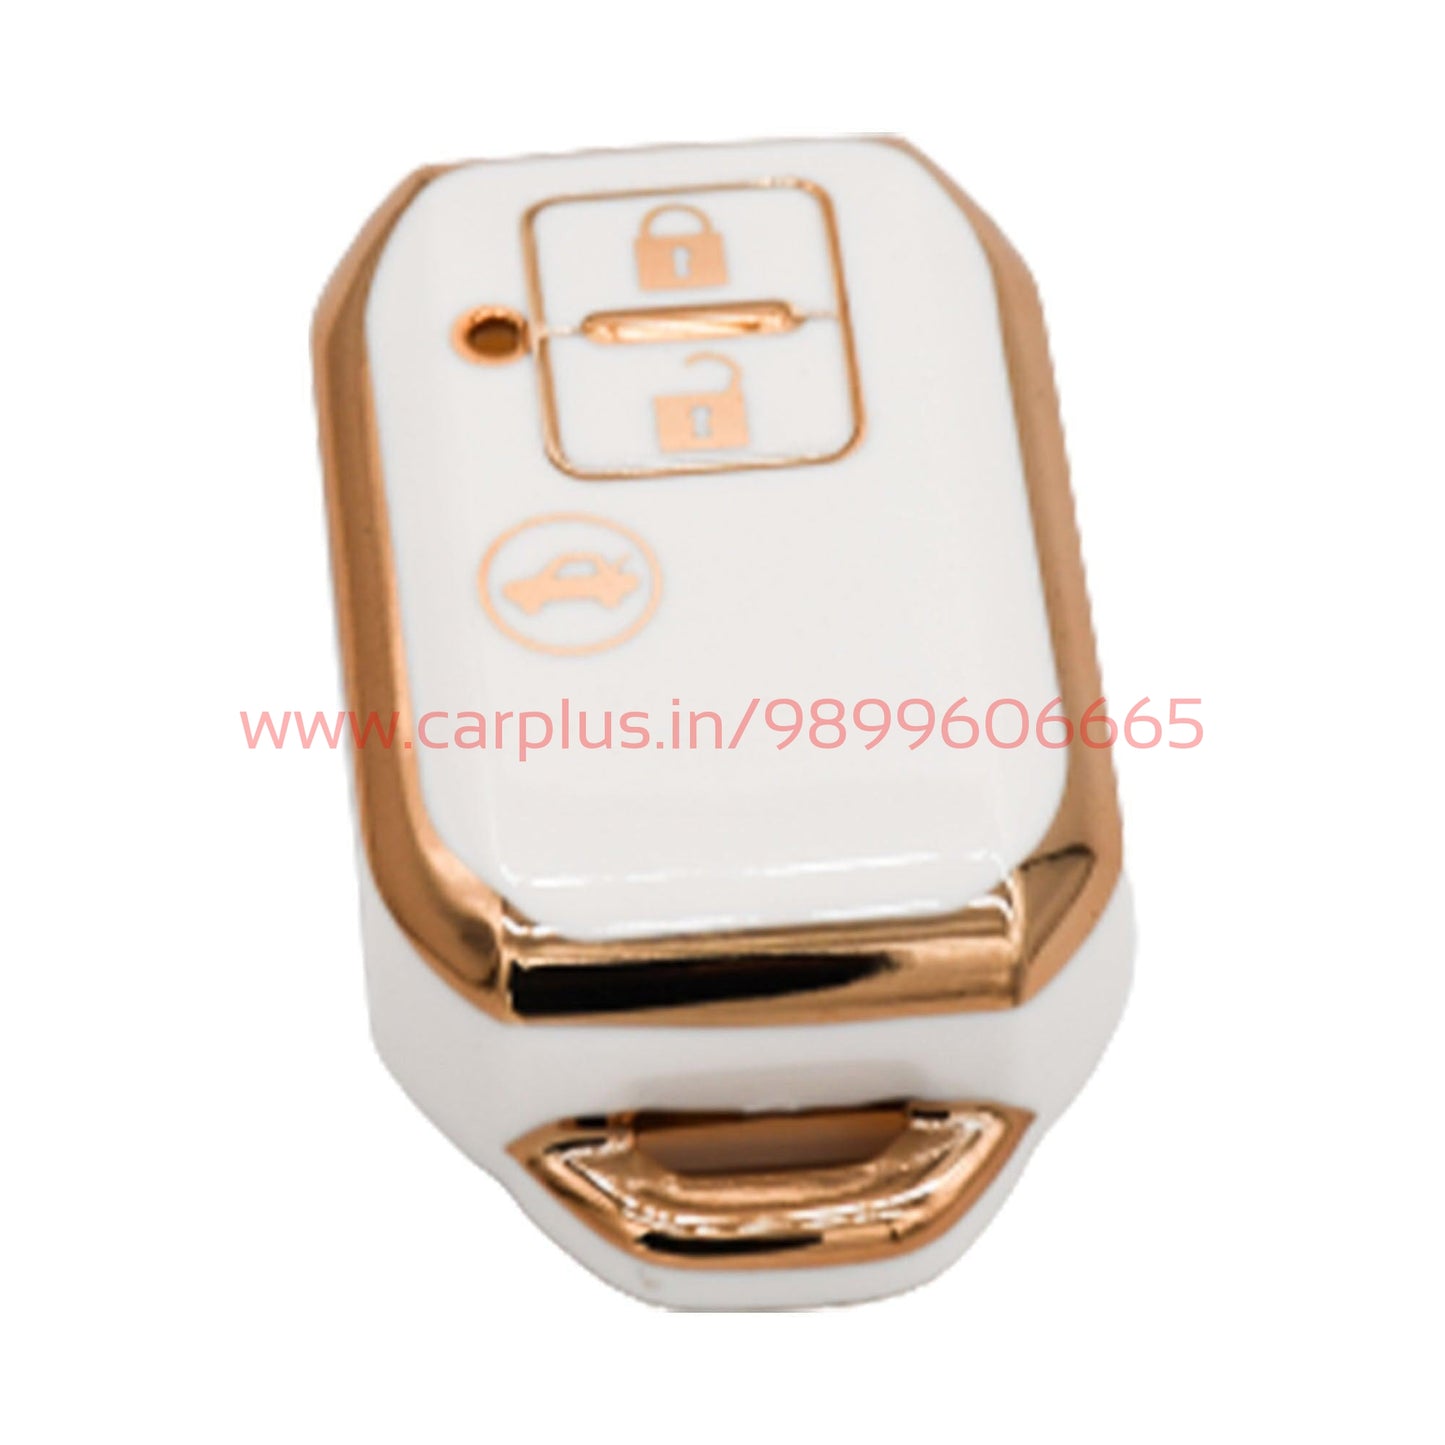 
                  
                    KMH TPU Gold Car Key Cover Compatible for Maruti Suzuki Swift, Dzire, Baleno, Ertiga 3 Button Smart Key Cover-TPU GOLD KEY COVER-KMH-TPU KEY COVER-White-CARPLUS
                  
                